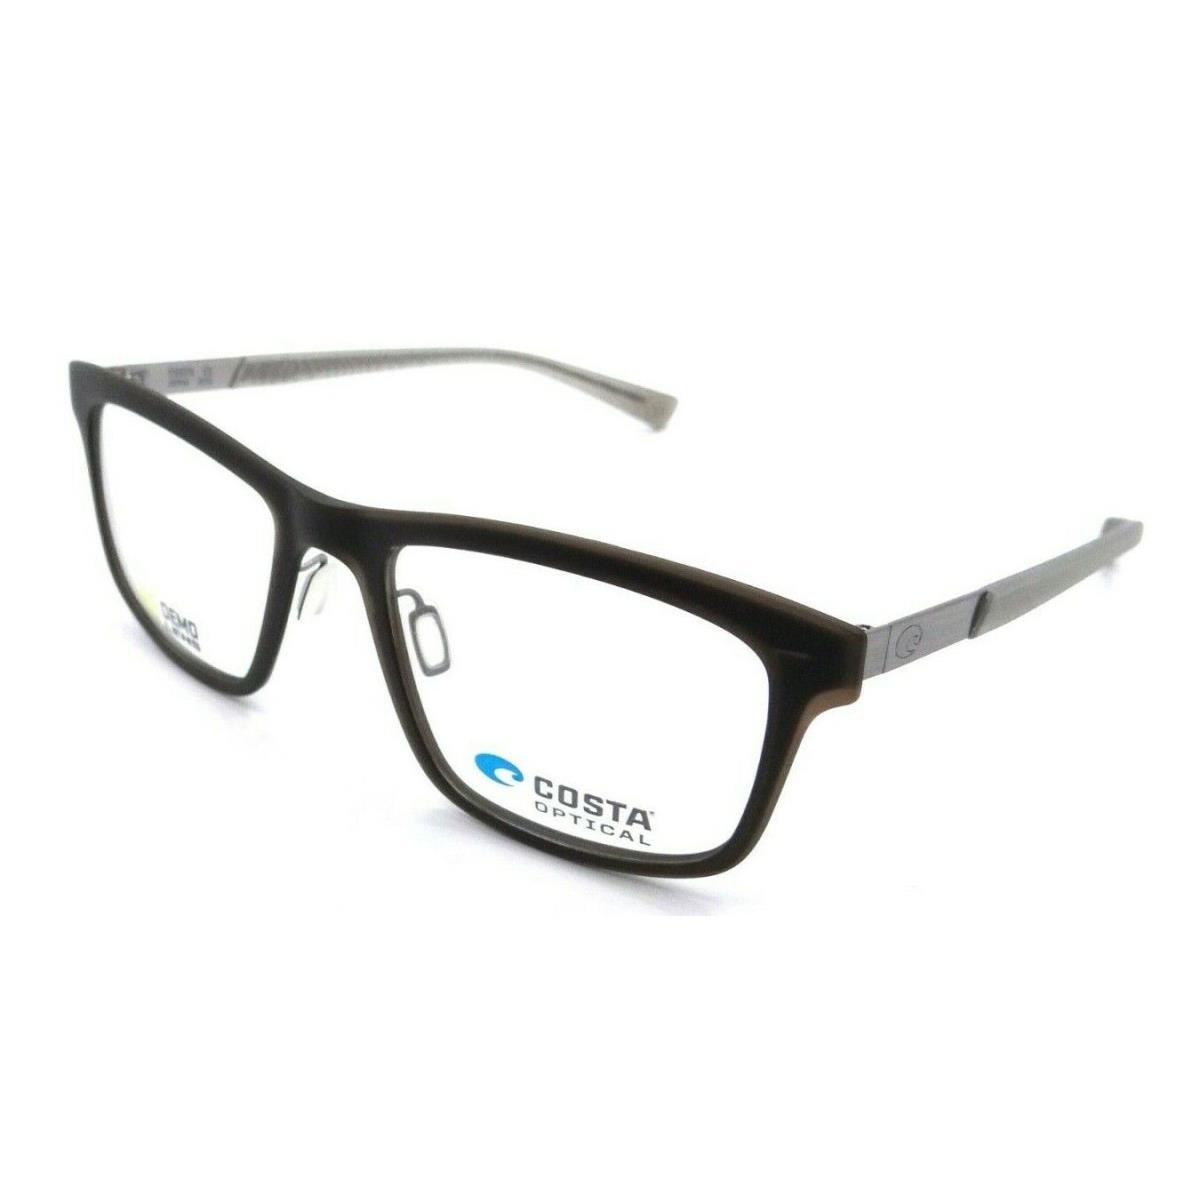 Costa Del Mar Eyeglasses Frame Pacific Rise 301 53-19-140 Matte Translucent Gray